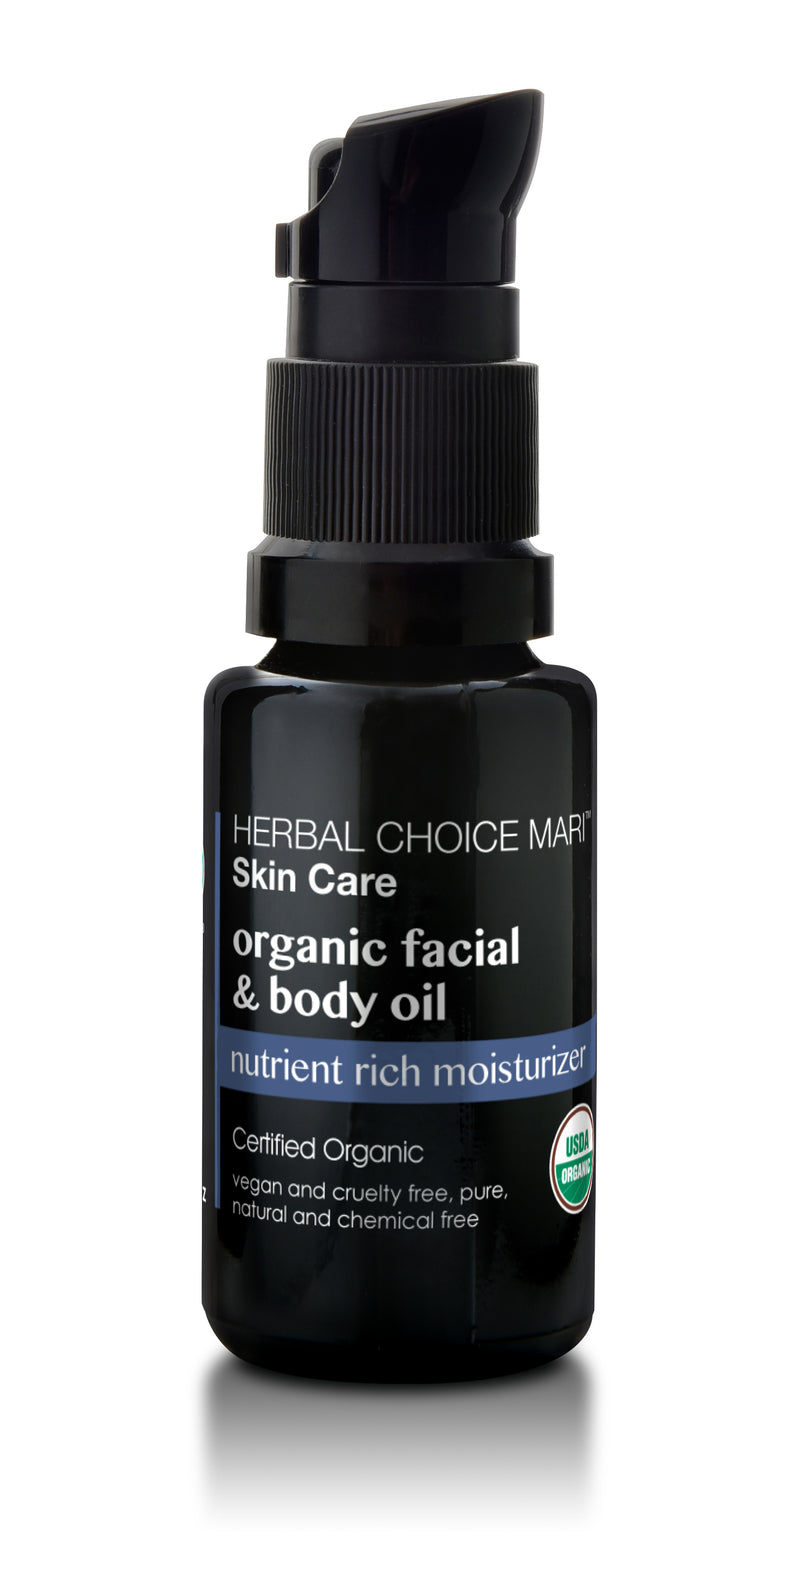 Herbal Choice Mari Organic Facial And Body Oil - Herbal Choice Mari Organic Facial And Body Oil - Herbal Choice Mari Organic Facial And Body Oil